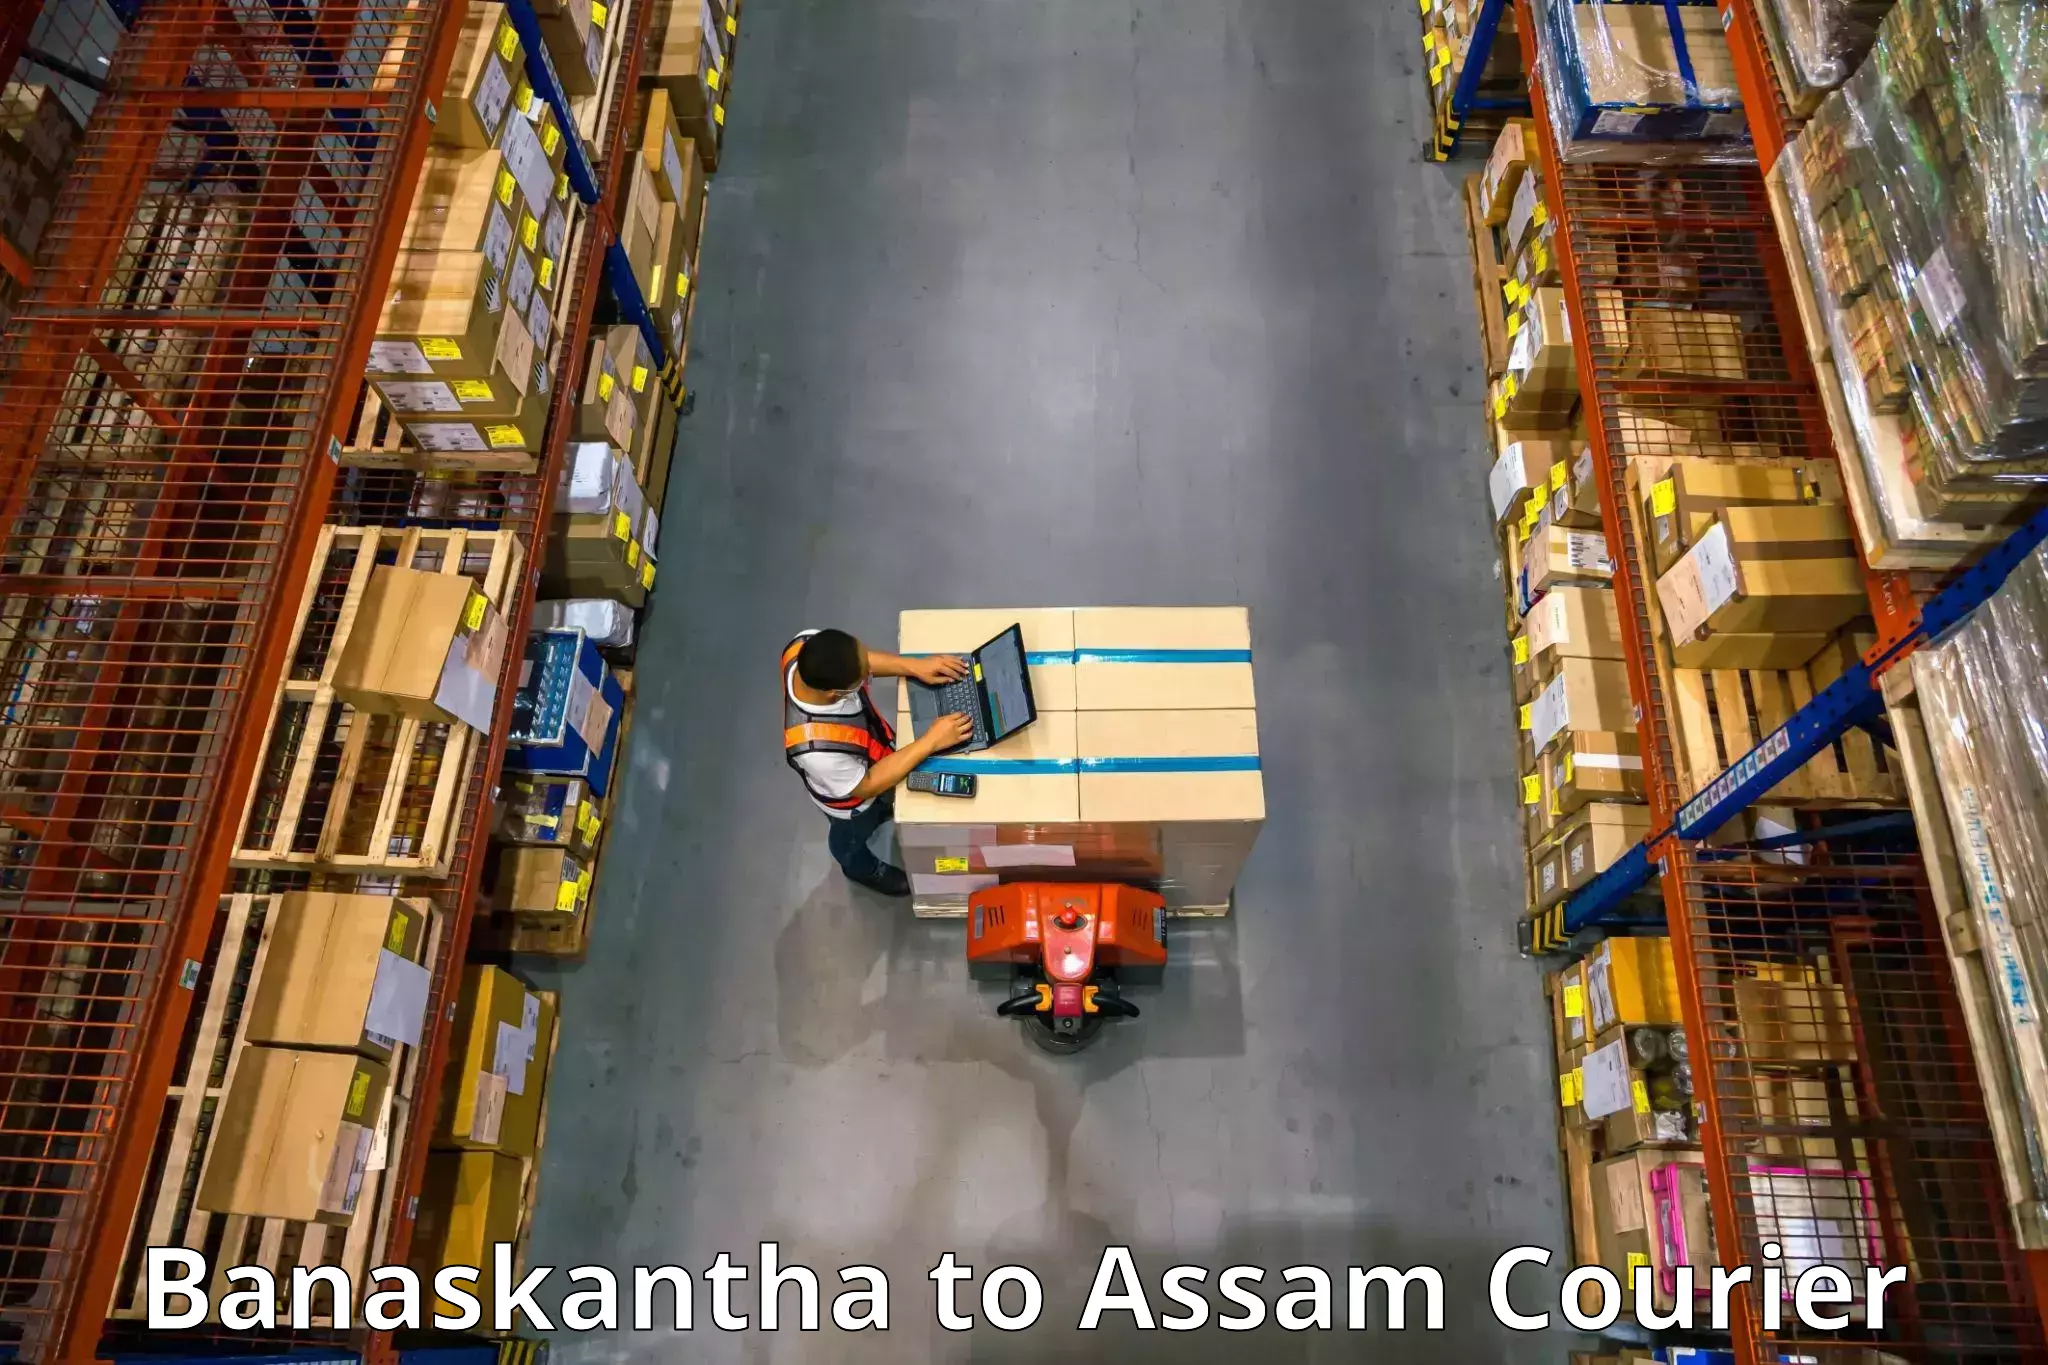 Quality moving company Banaskantha to Assam